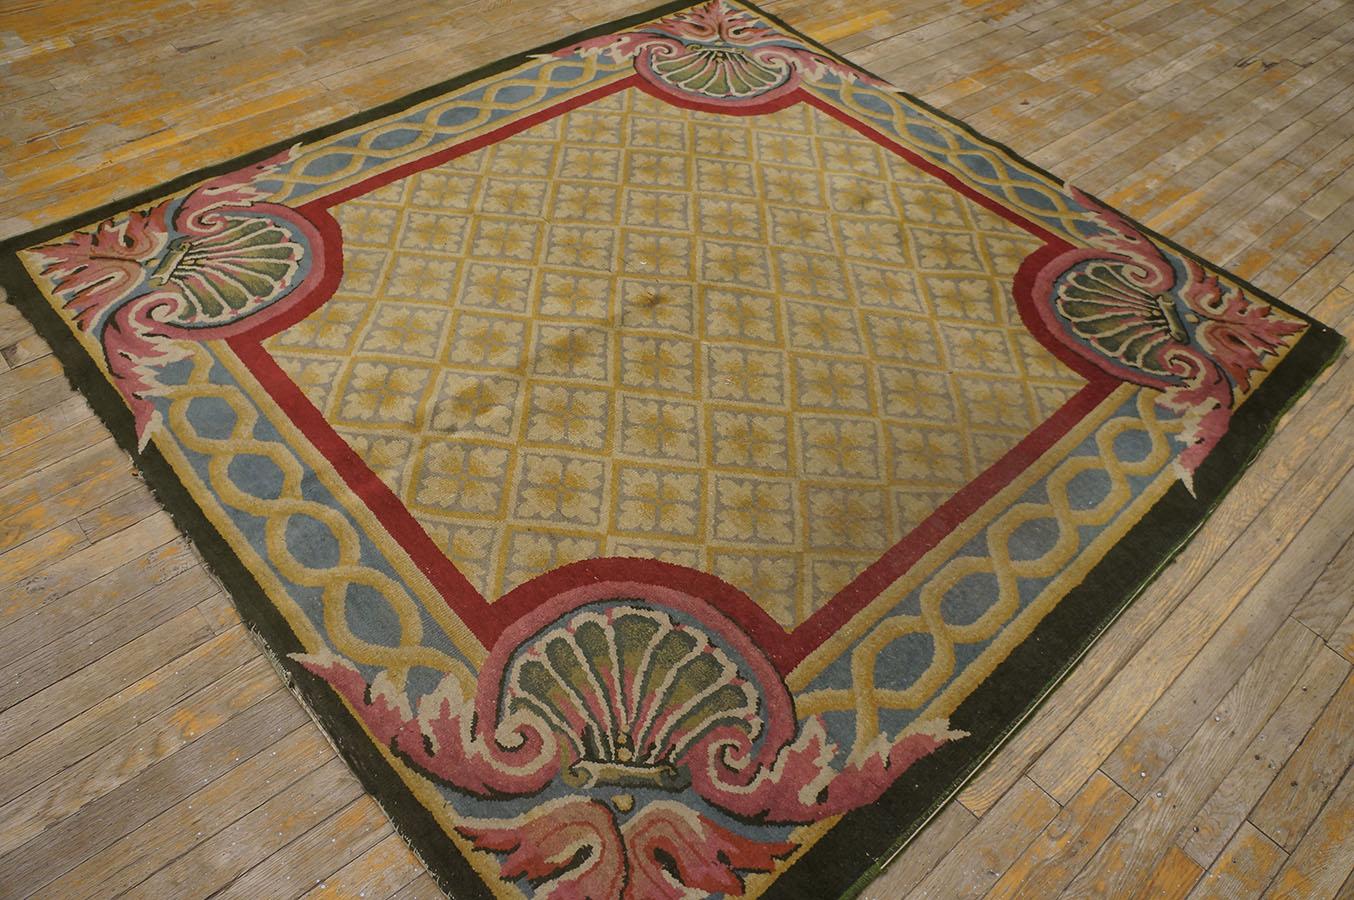 1920s Chinese Art Deco Carpet with European Design Influences
( 5'7